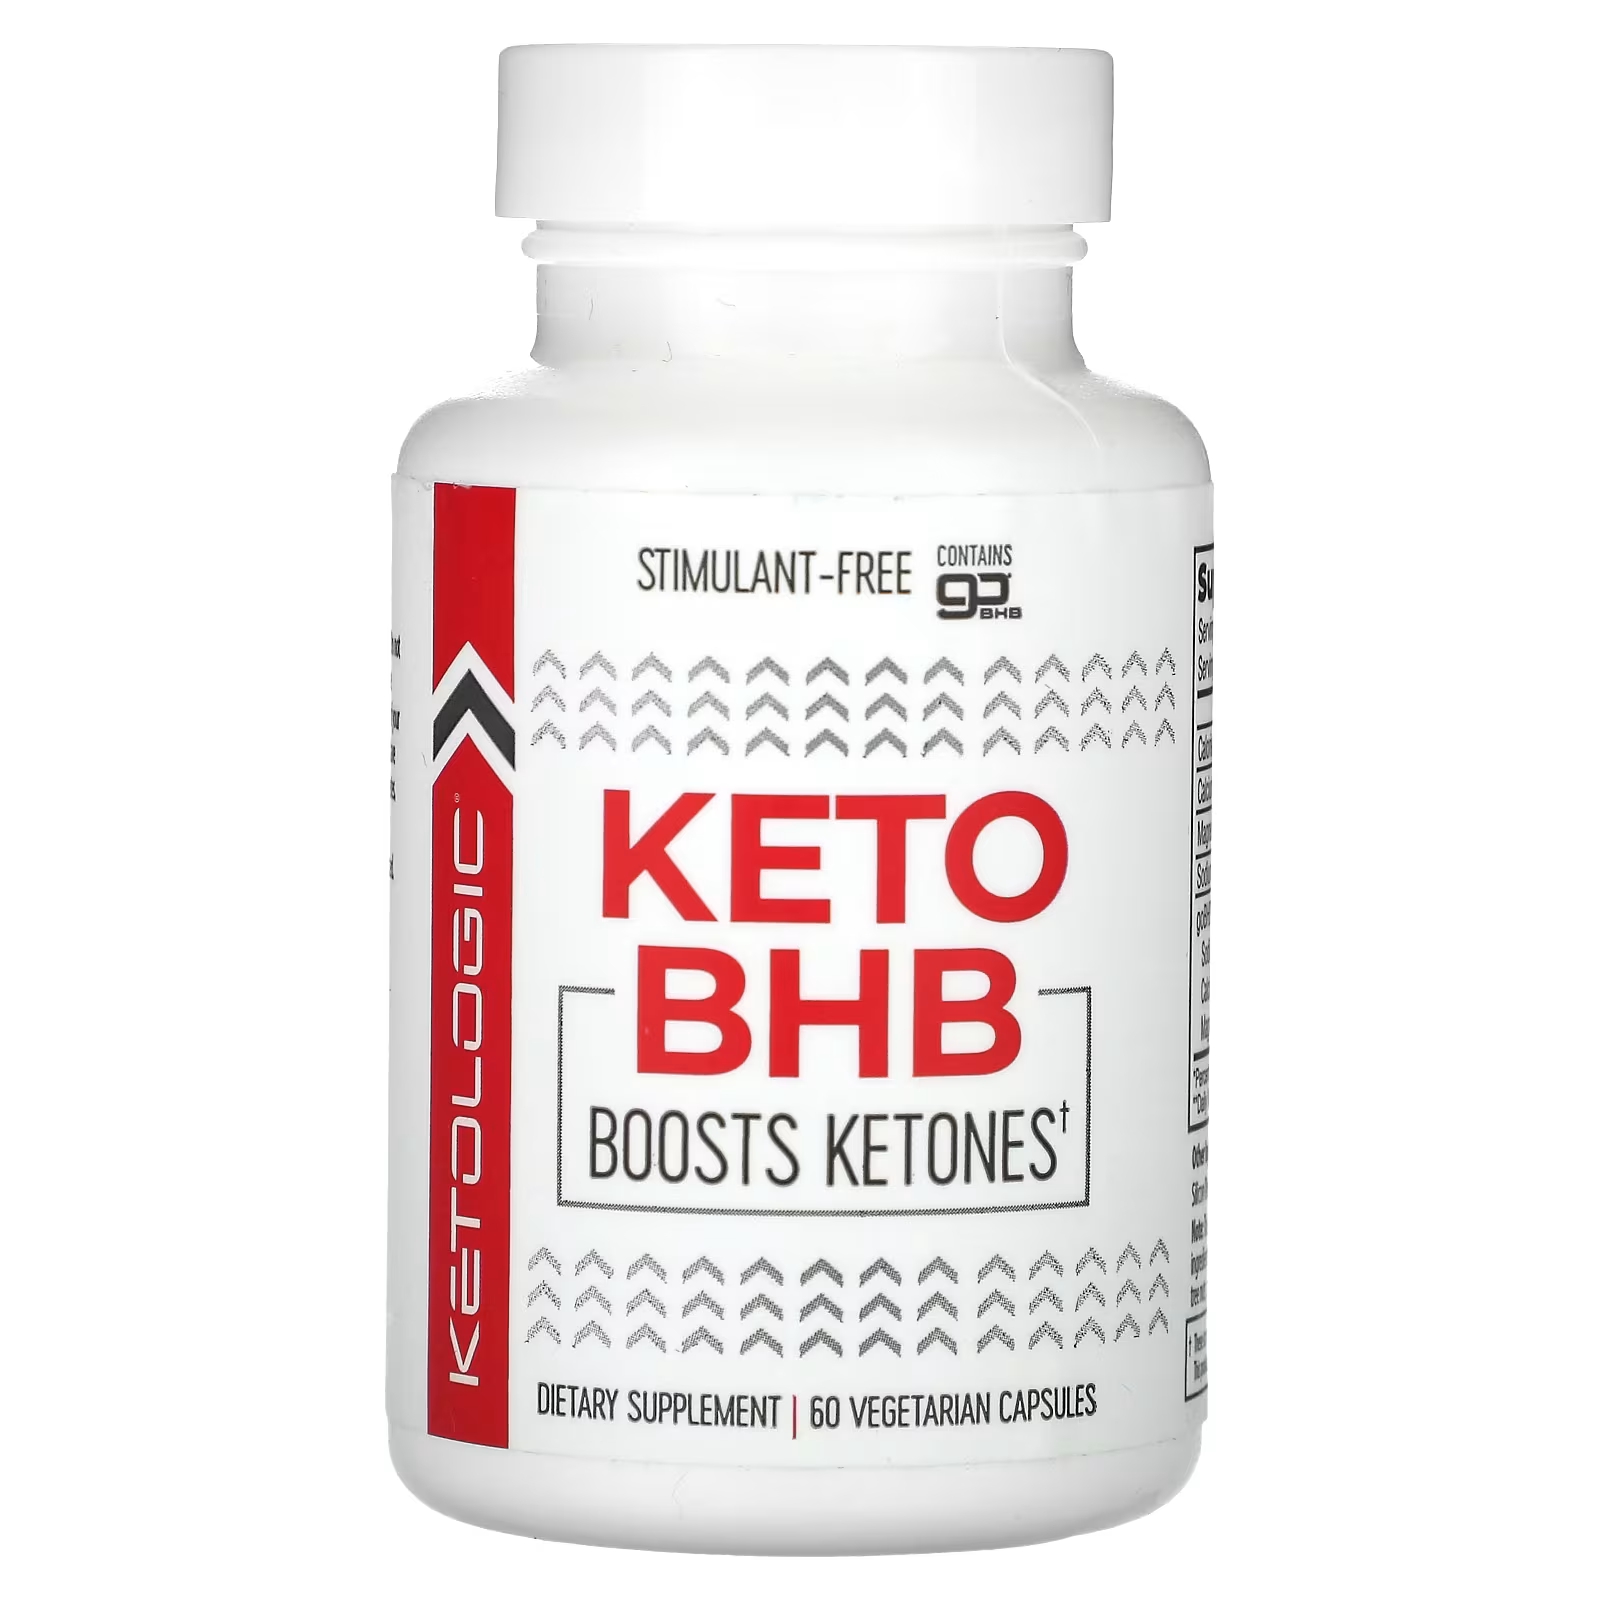 Пищевая добавка KetoLogic BHB, 60 капсул ketologic detox keto bhb яблочный уксус 60 вегетарианских капсул